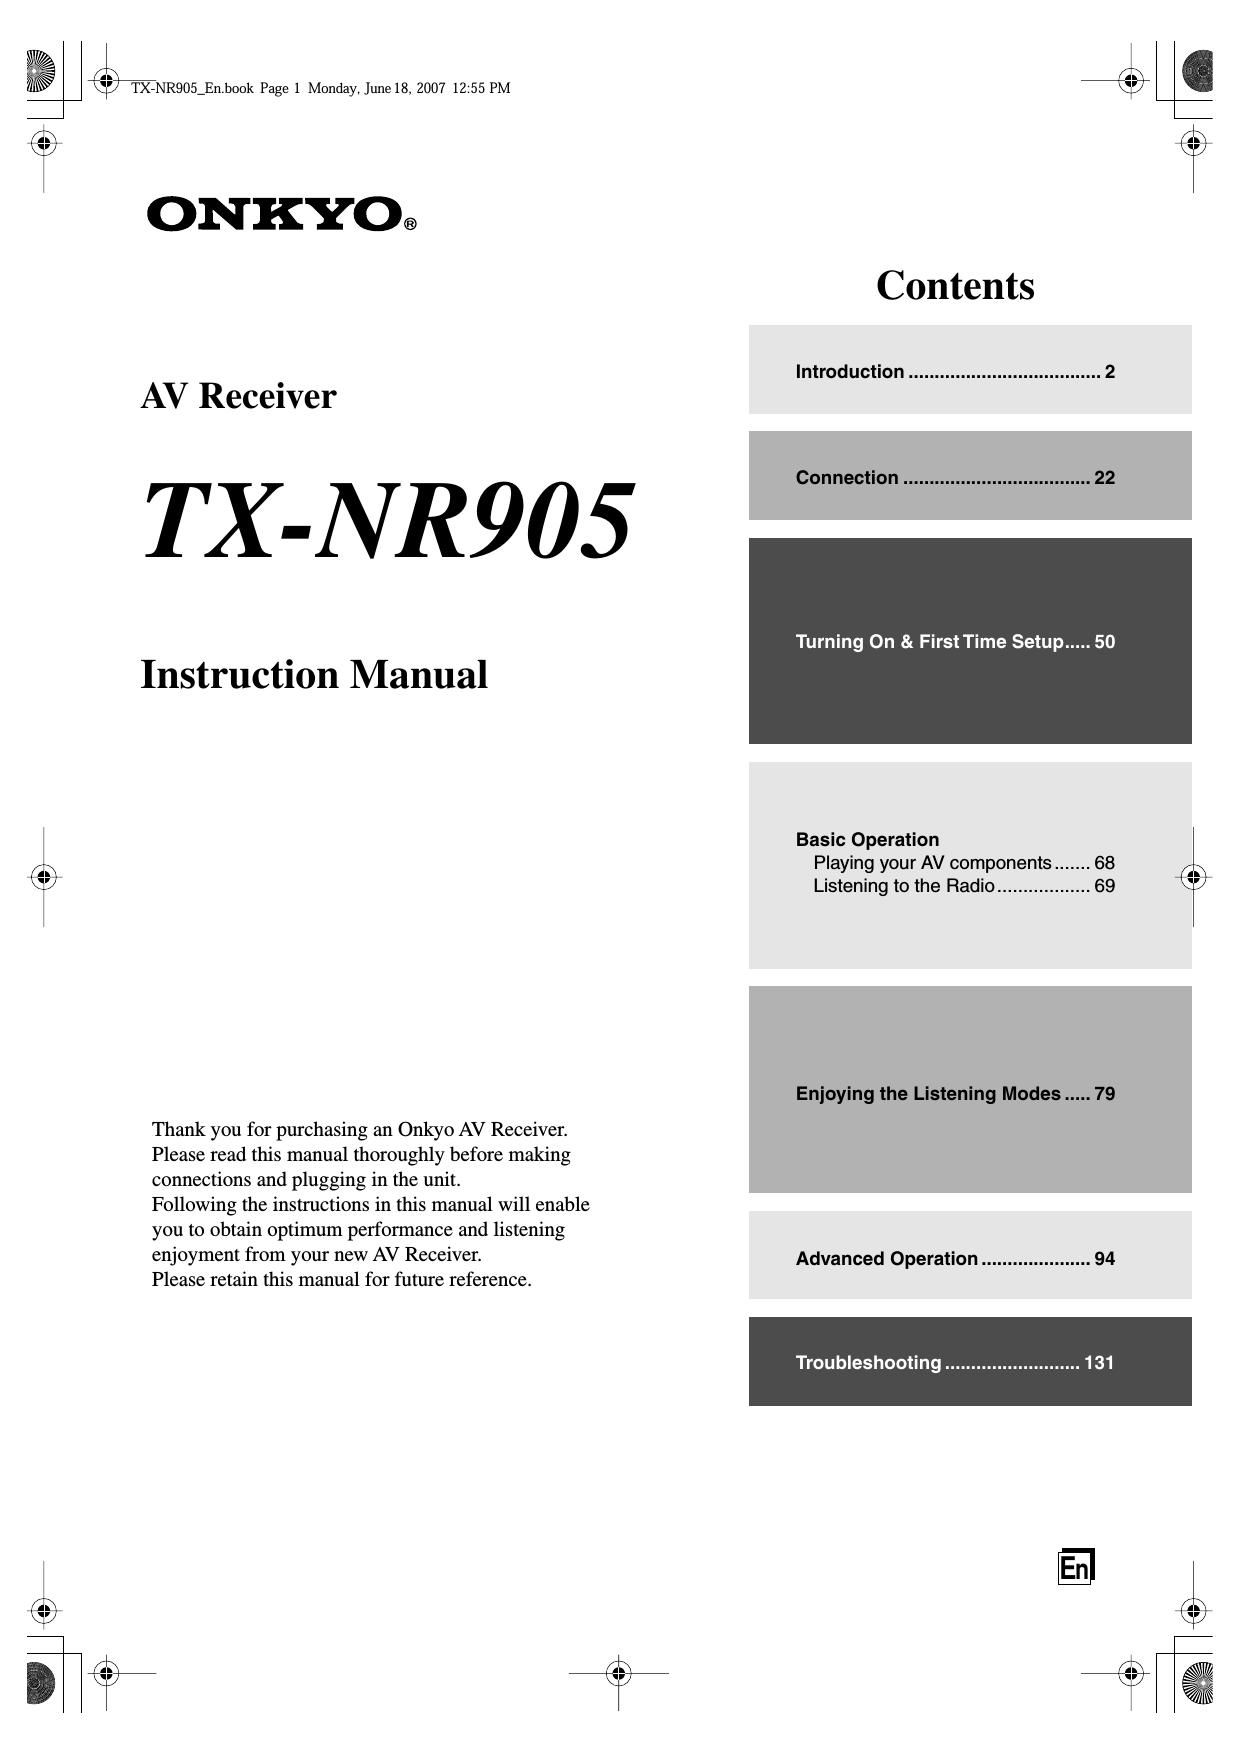 Onkyo TXNR 905 Owners Manual